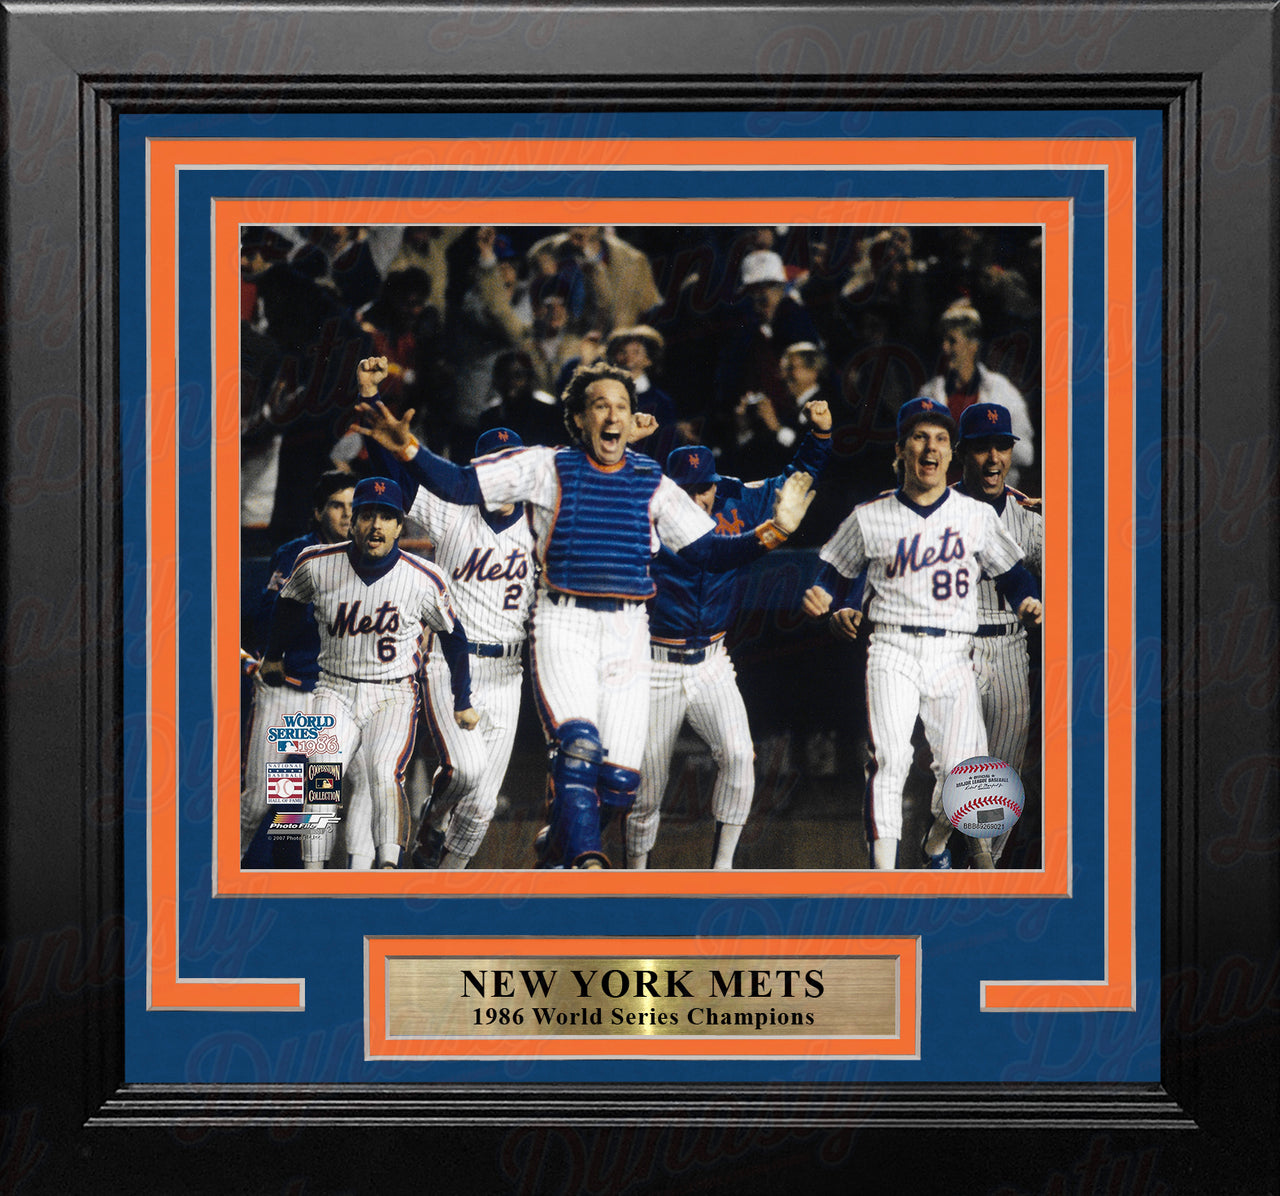 New York Yankees All-Time Greats 8 x 10 Framed Baseball Photo